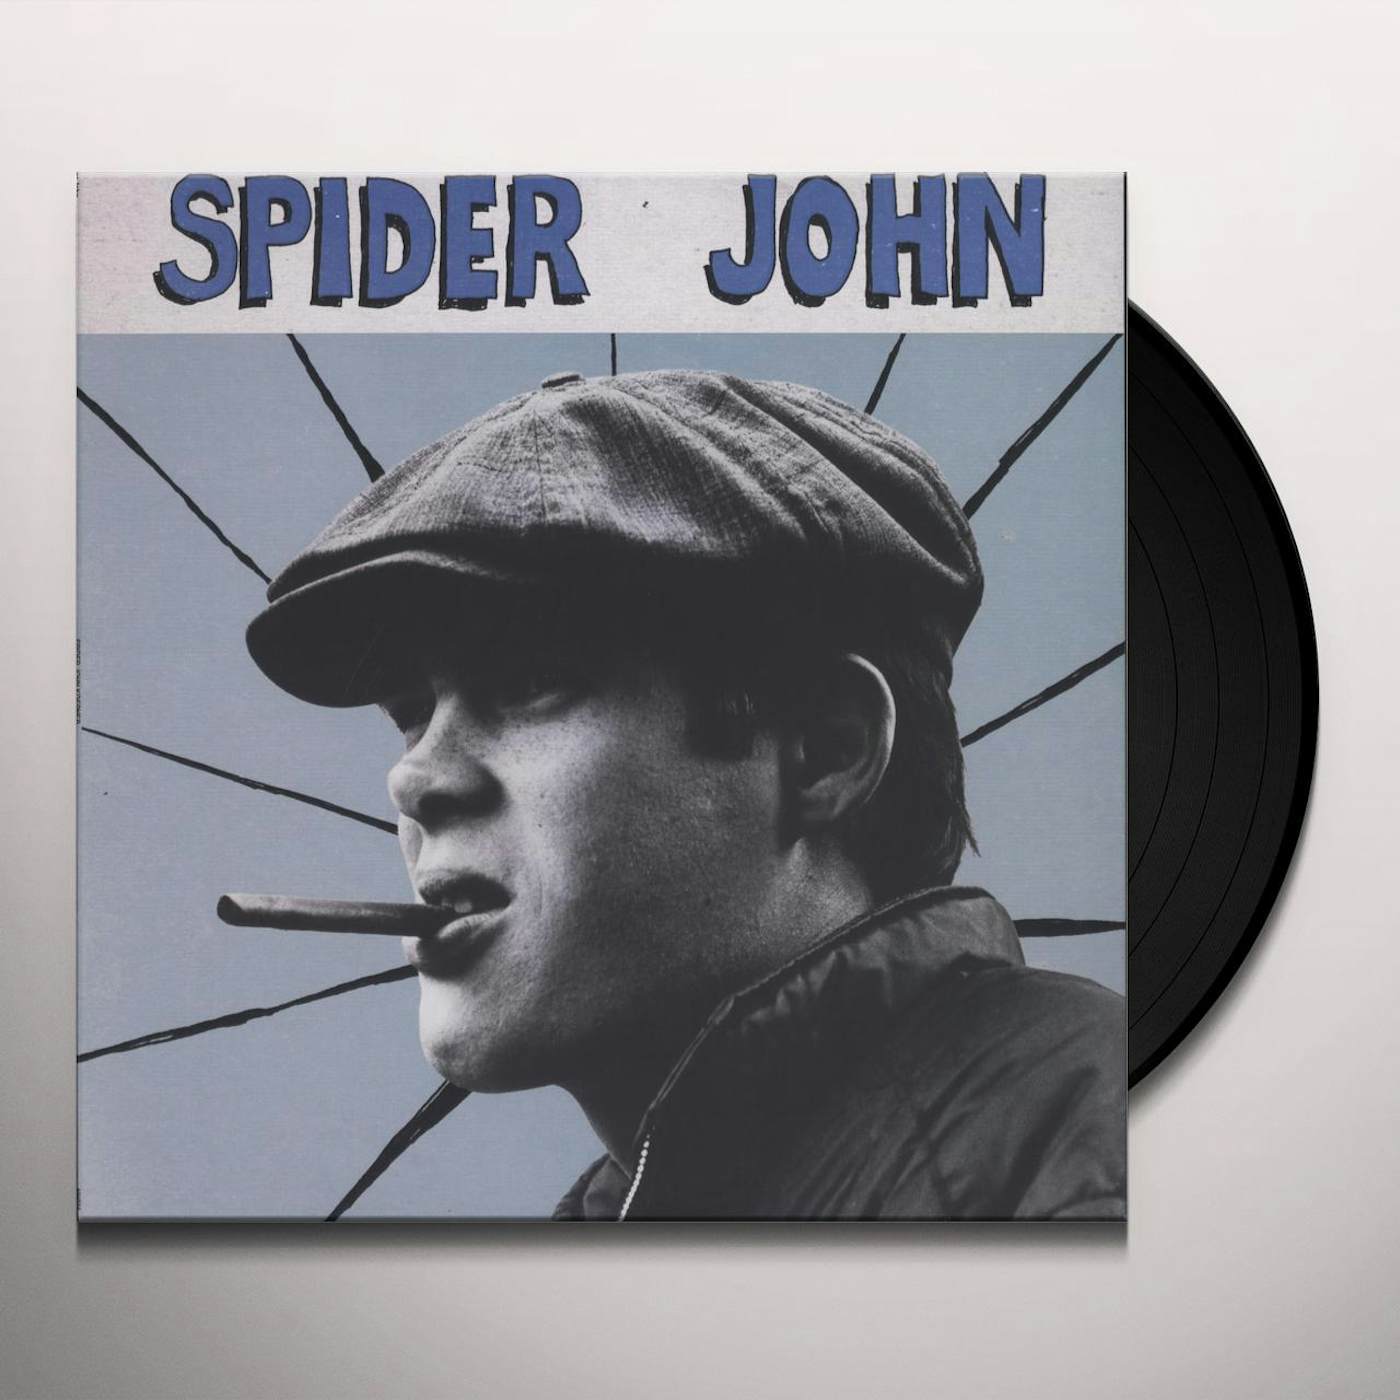 Spider John Koerner SPIDER JOHN Vinyl Record